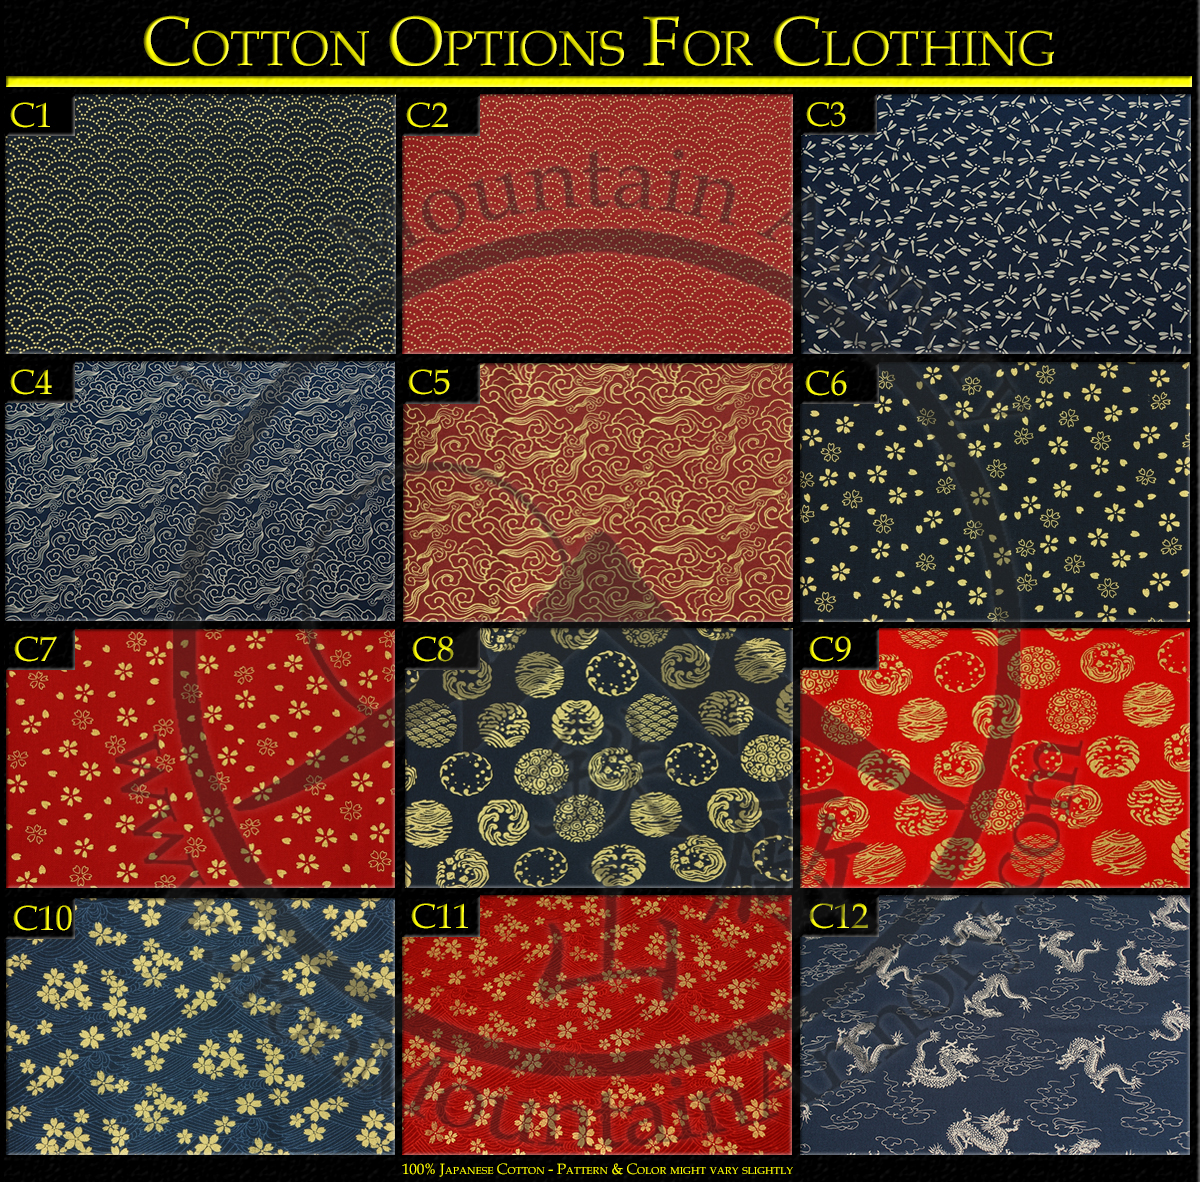 Japanese Cotton Clothing Options